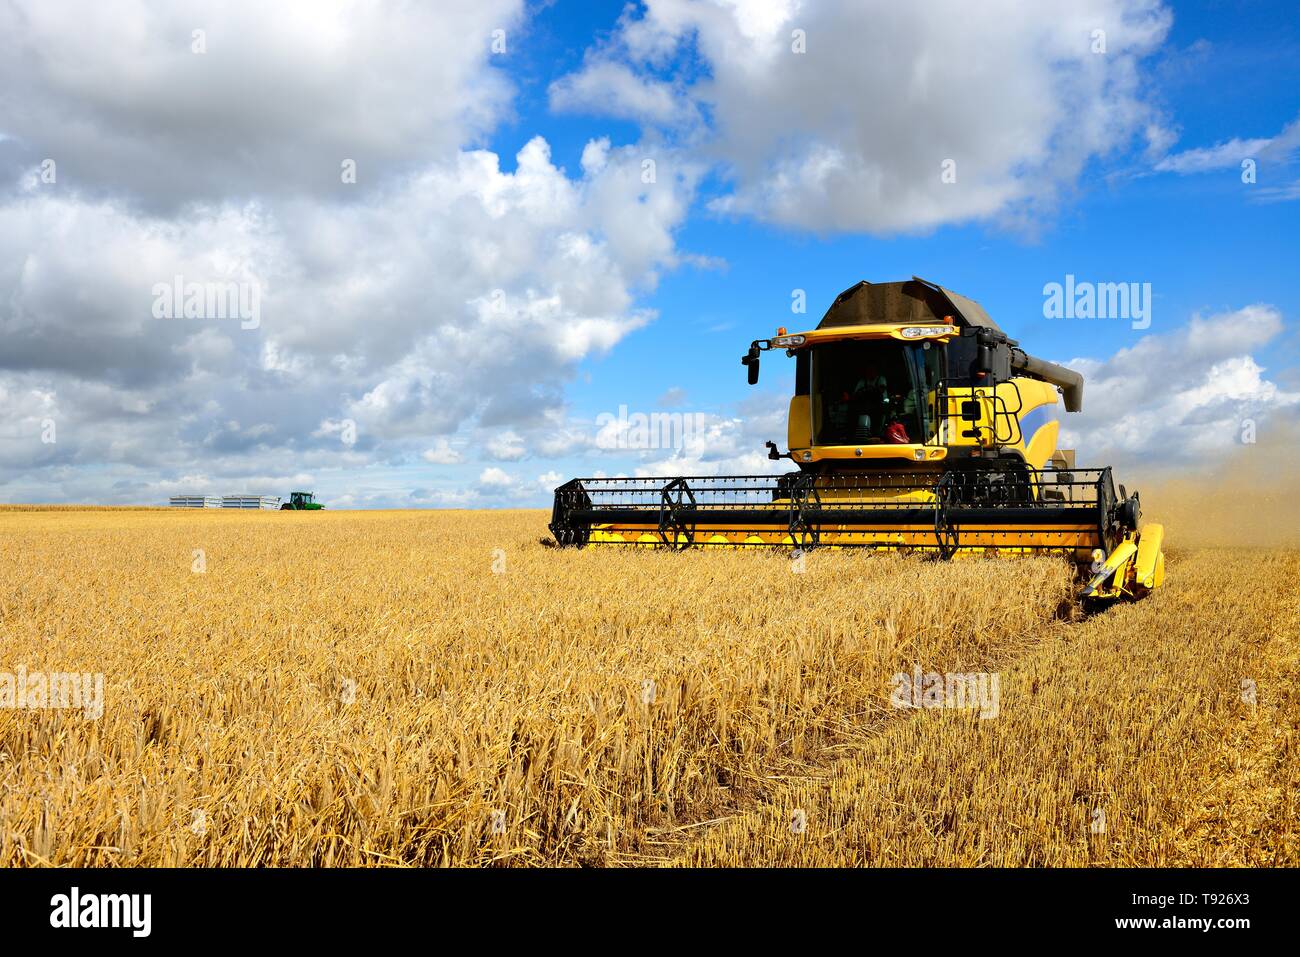 Combine harvester in cornfield harvests Barley (Hordeum vulgare), blue sky with cumulus clouds, tractor with trailers on the horizon, Saalekreis Stock Photo